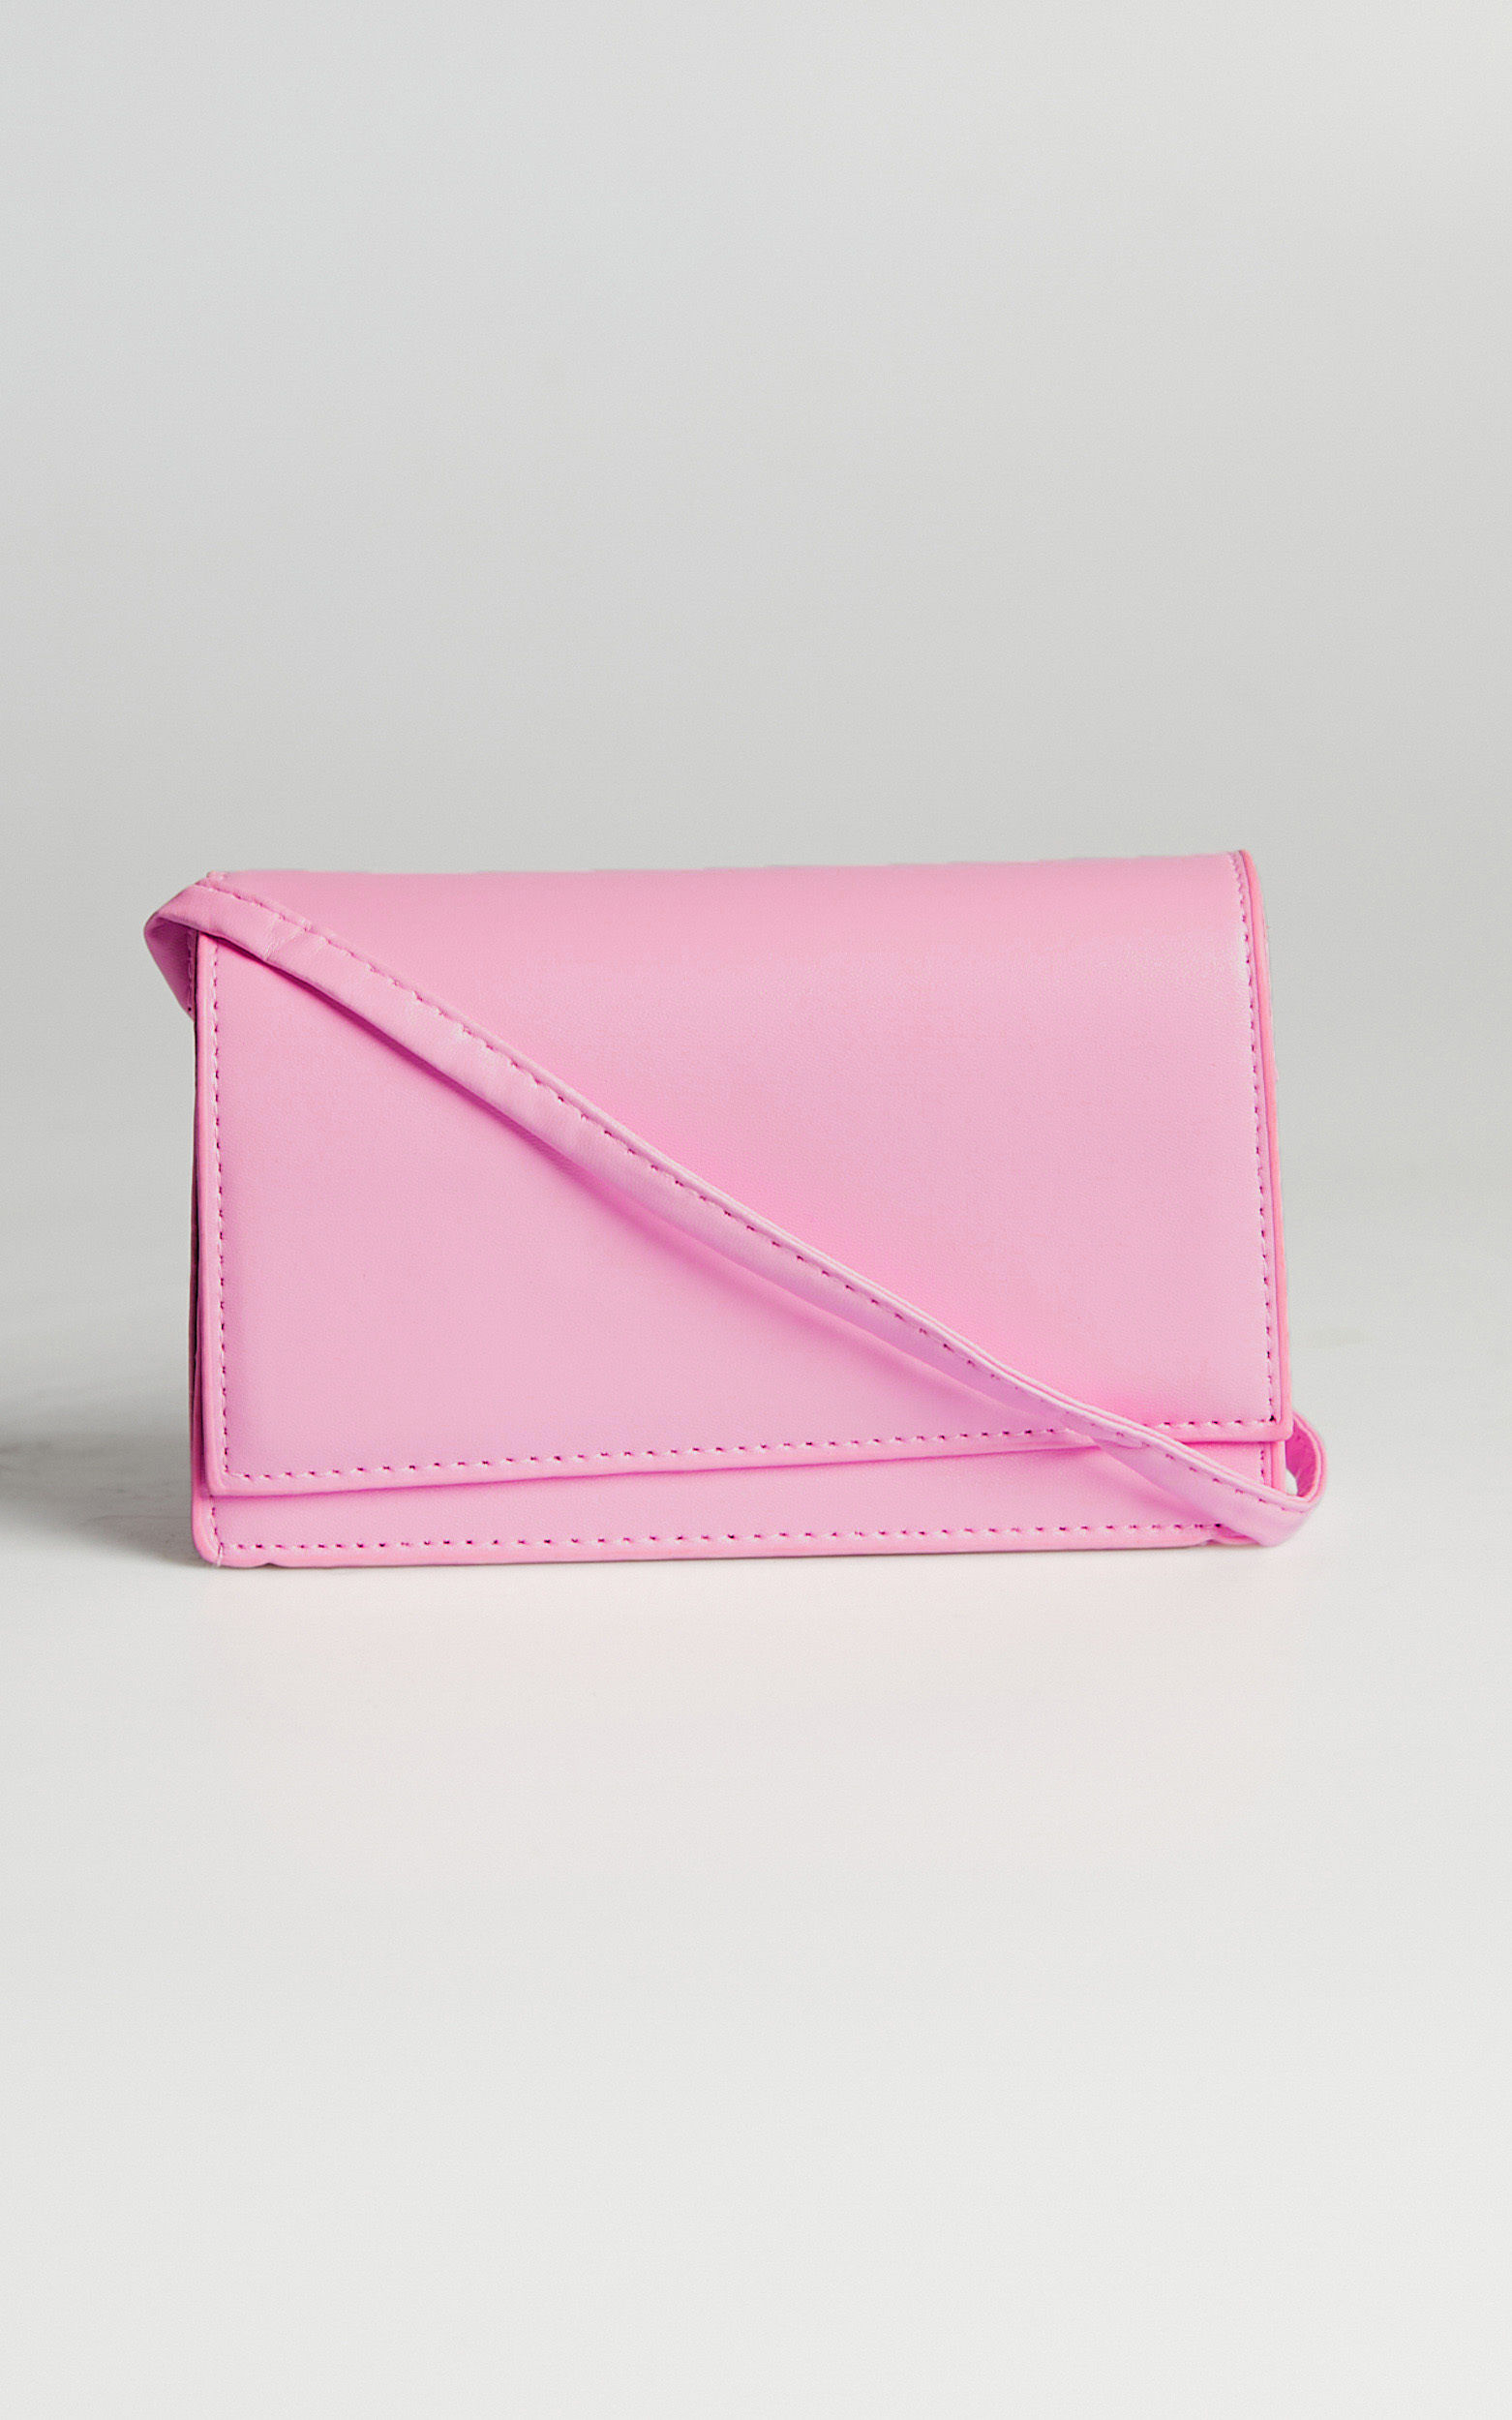 Narda Bag in Pink - NoSize, PNK1, hi-res image number null